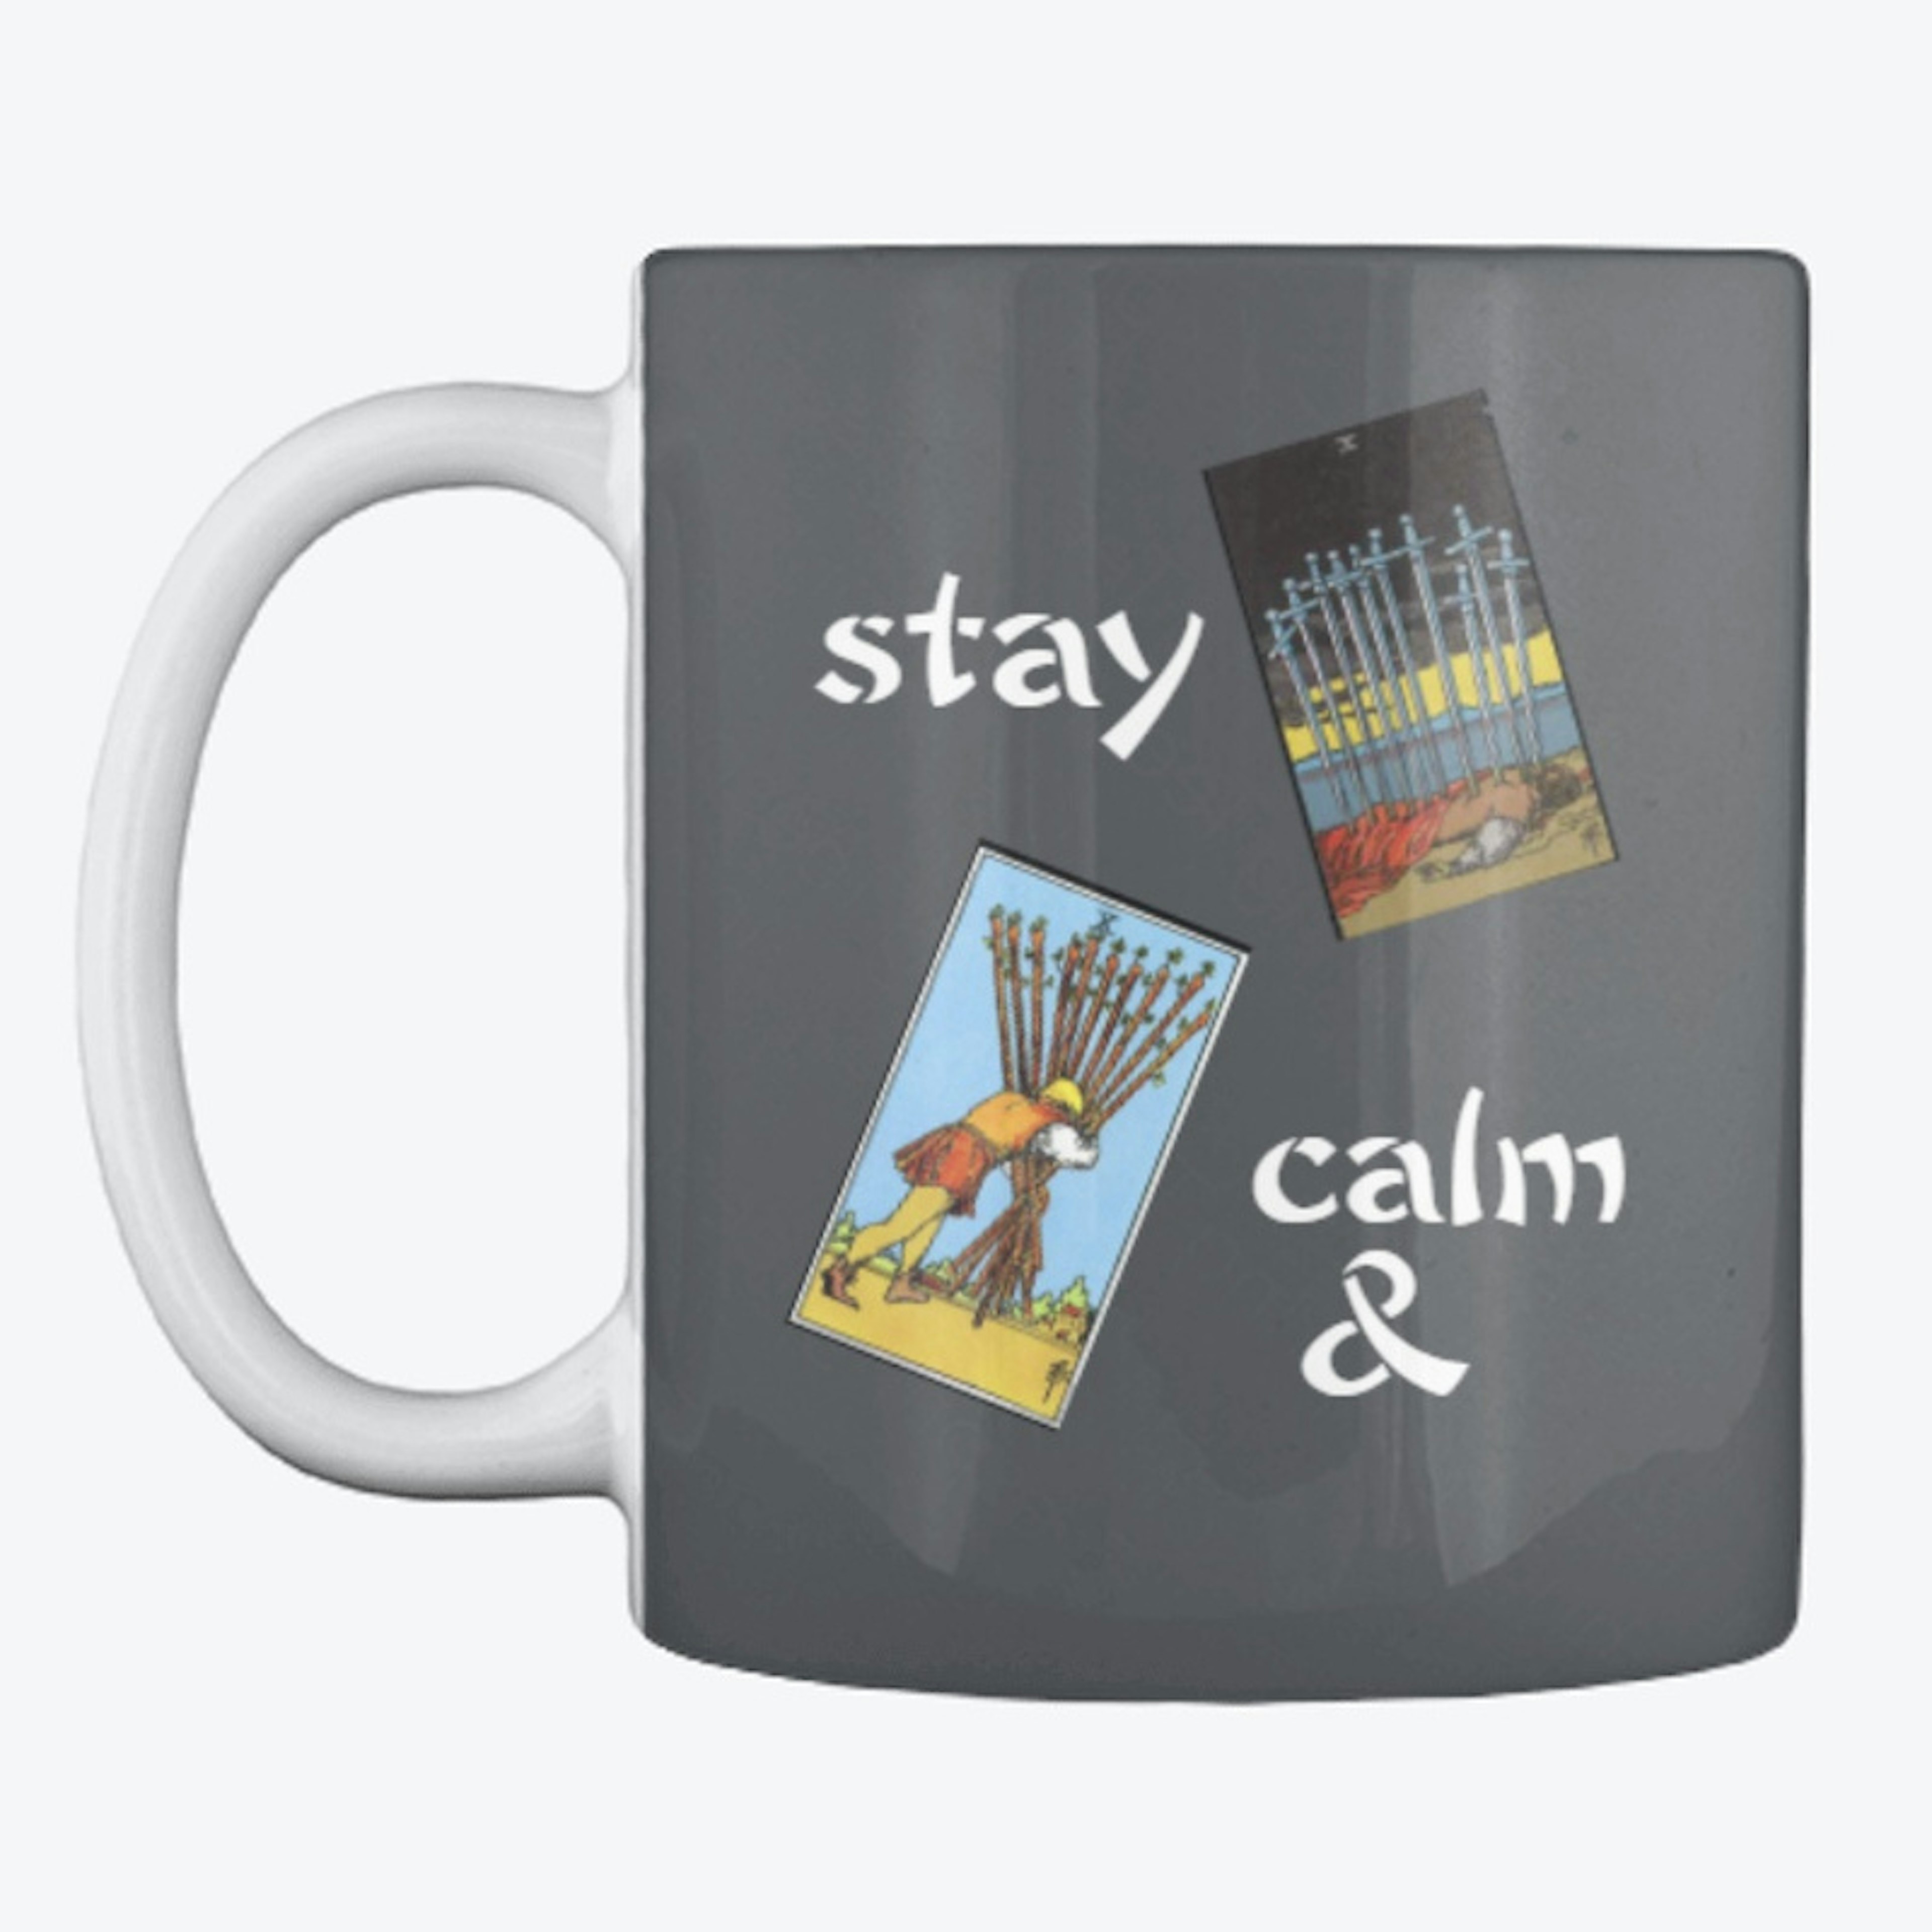 Stay Calm Mug